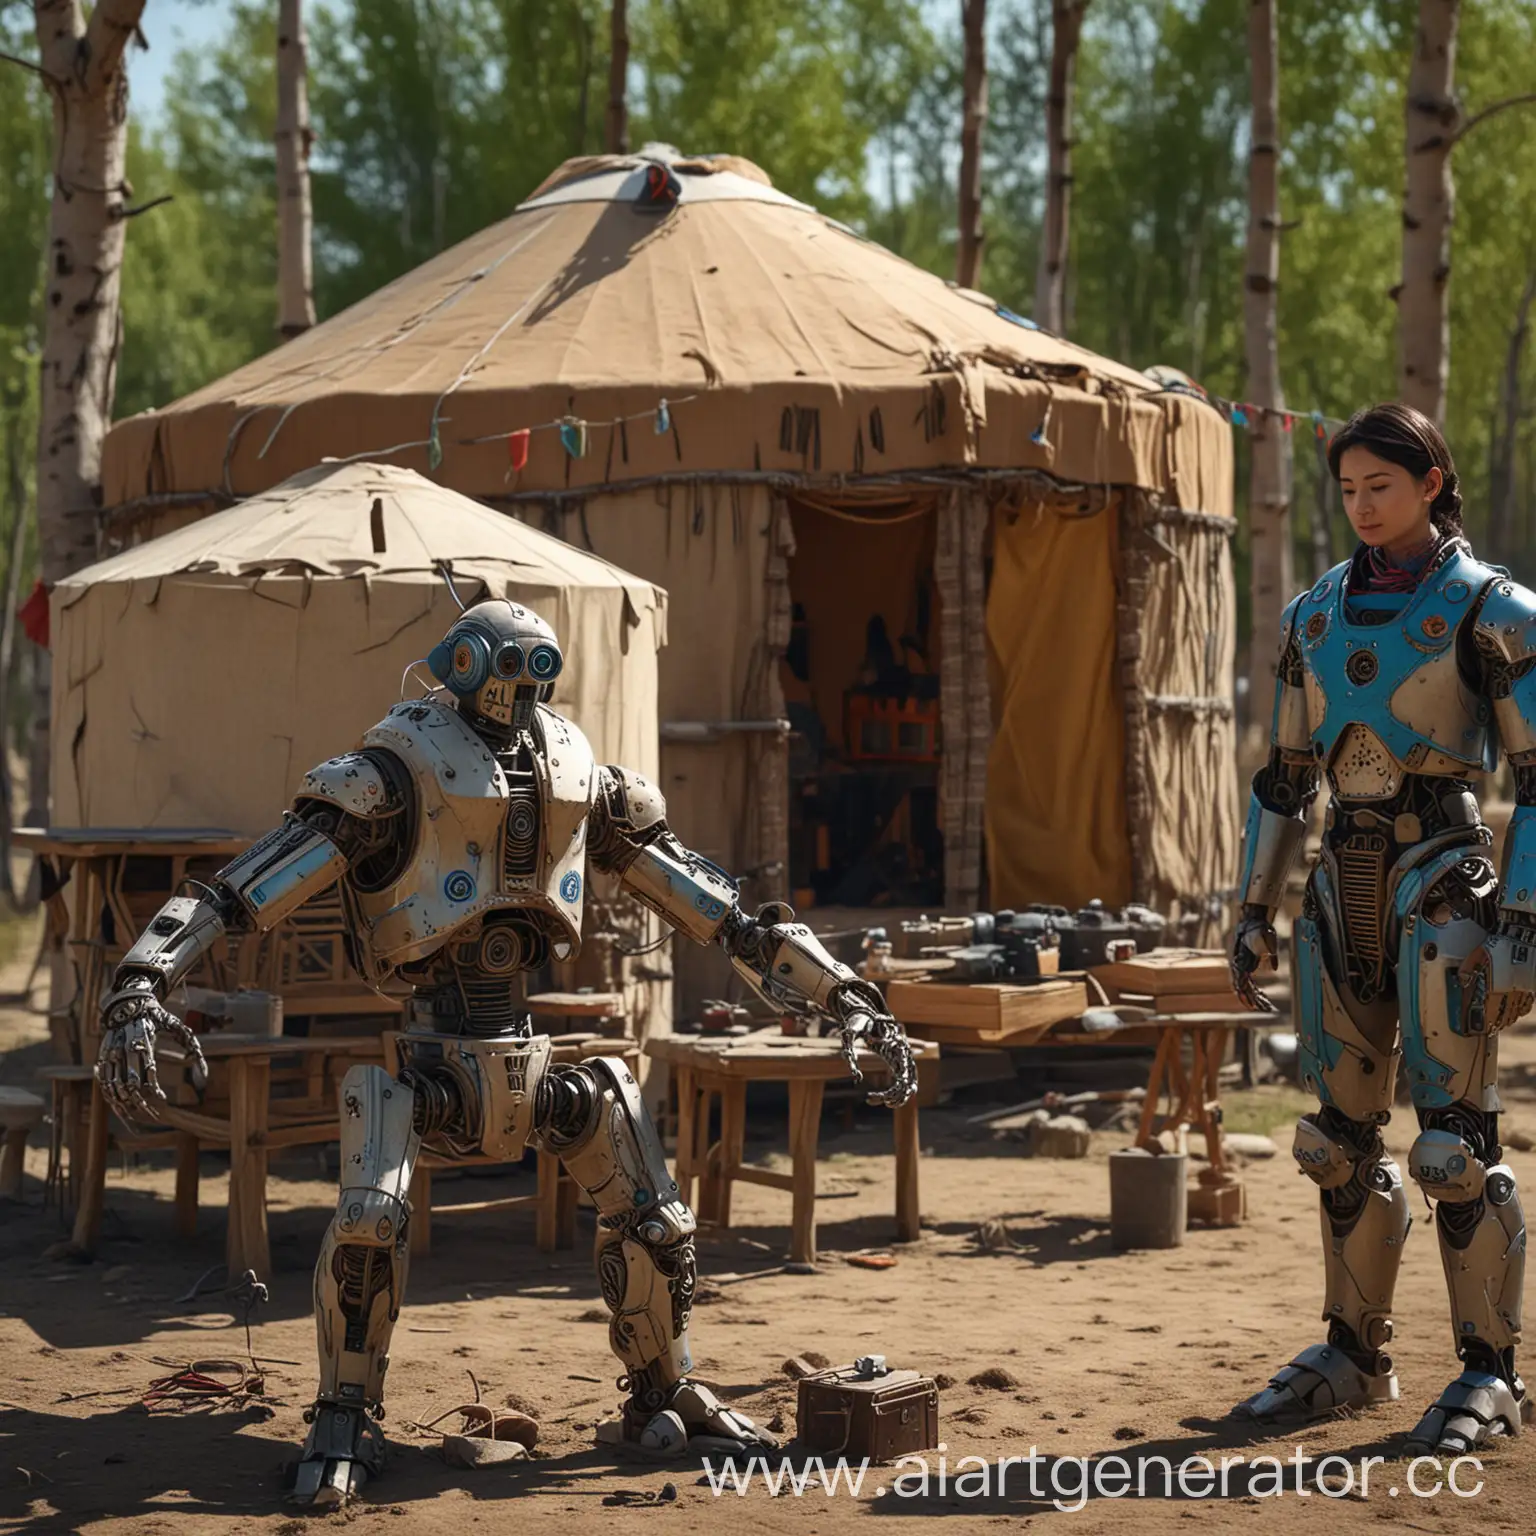 Kazakh-Teacher-Creating-Robots-in-Central-Asian-Yurt-Village-4K-Realistic-Outdoor-Scene